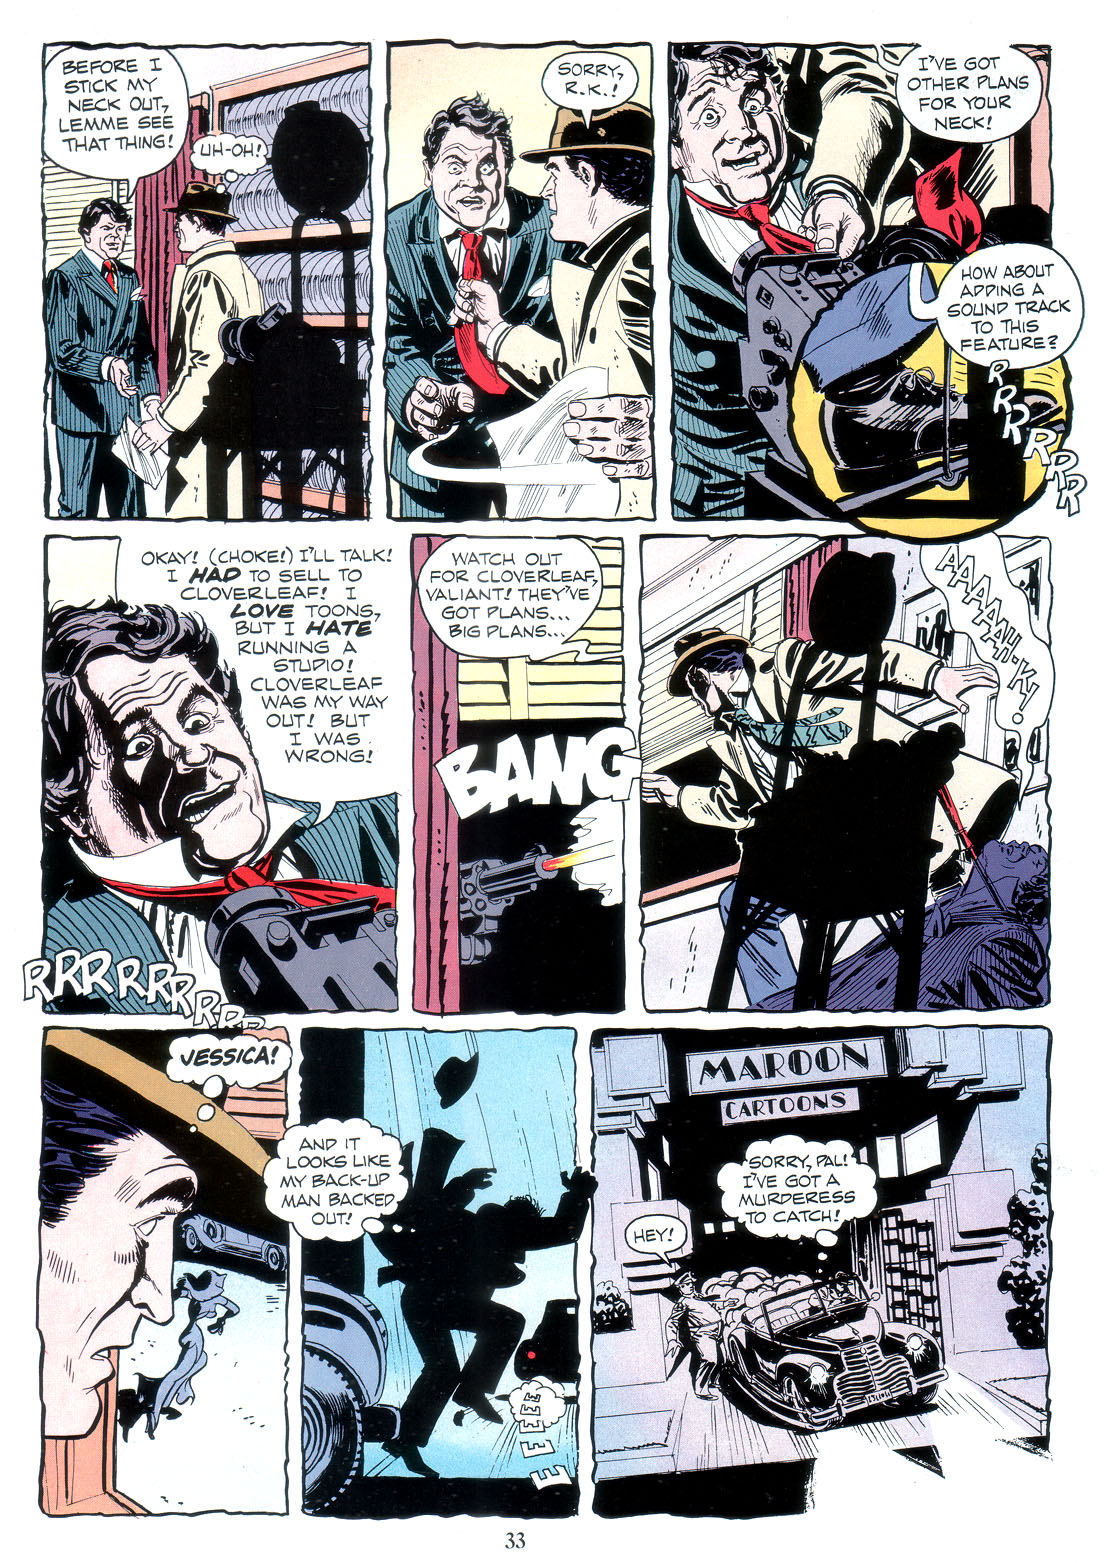 Marvel Graphic Novel issue 41 - Who Framed Roger Rabbit - Page 35